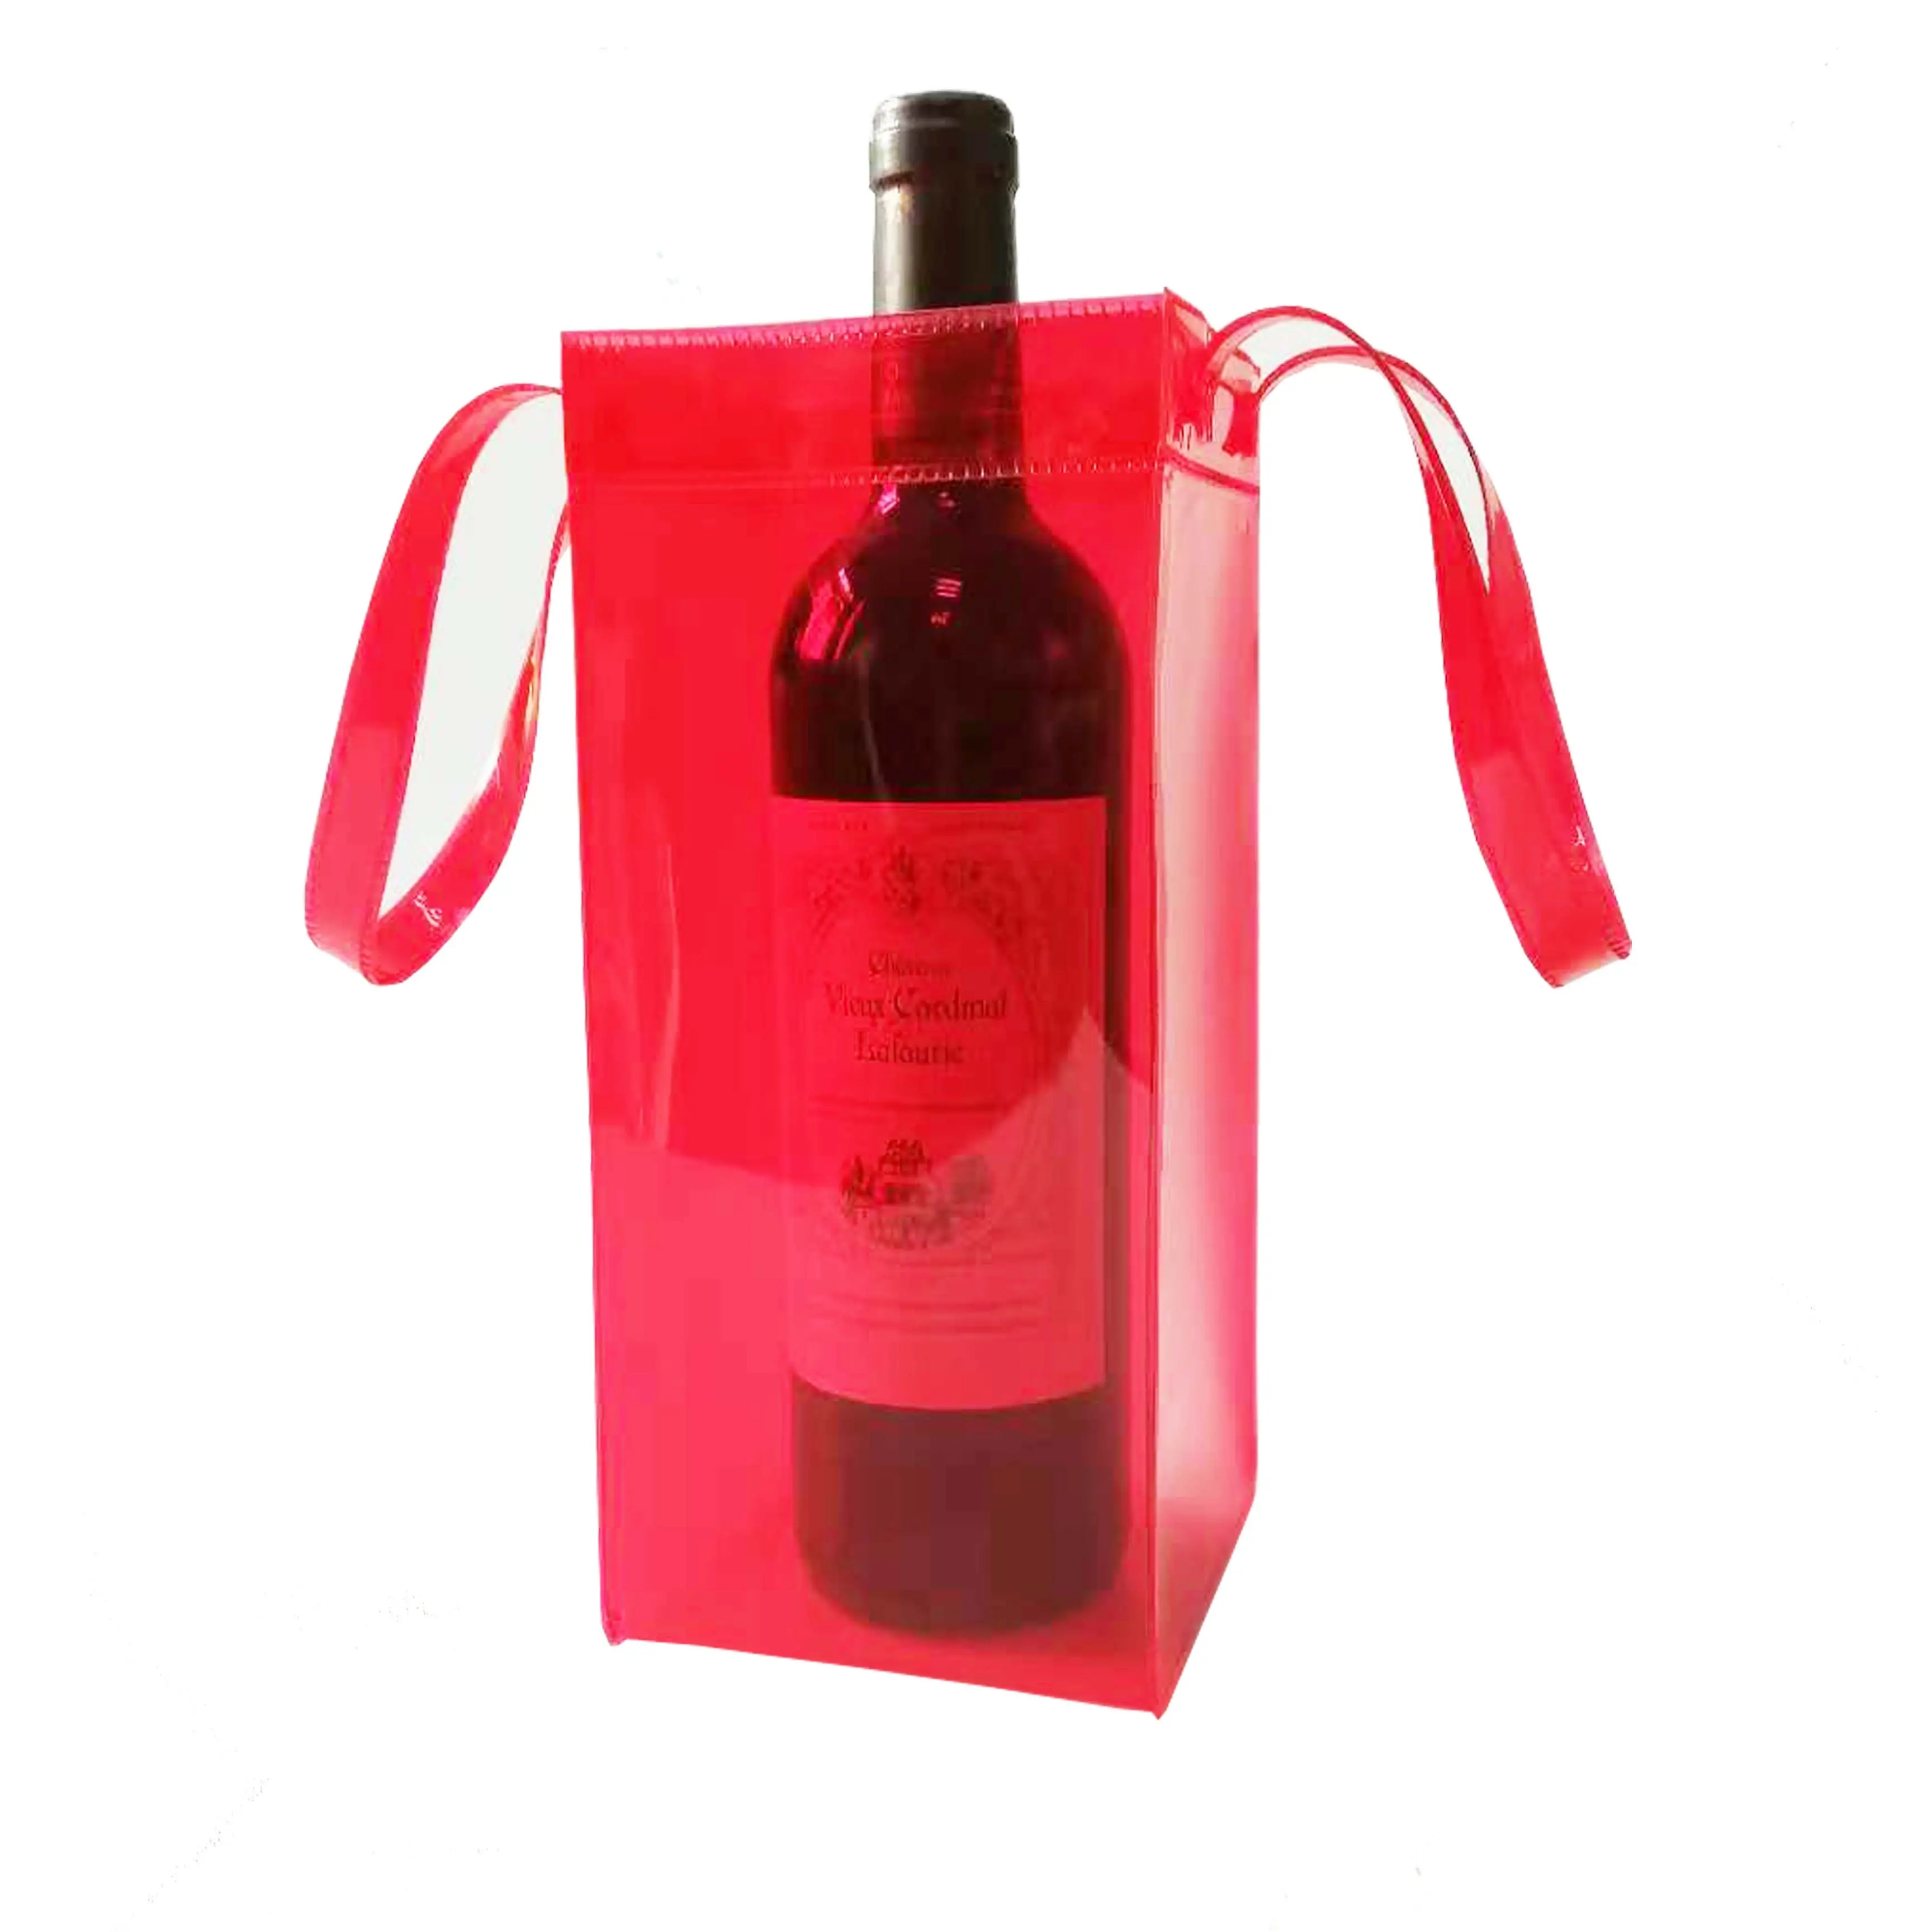 Christmas new designed PVC material red wine bottle plastic cooler ice bag